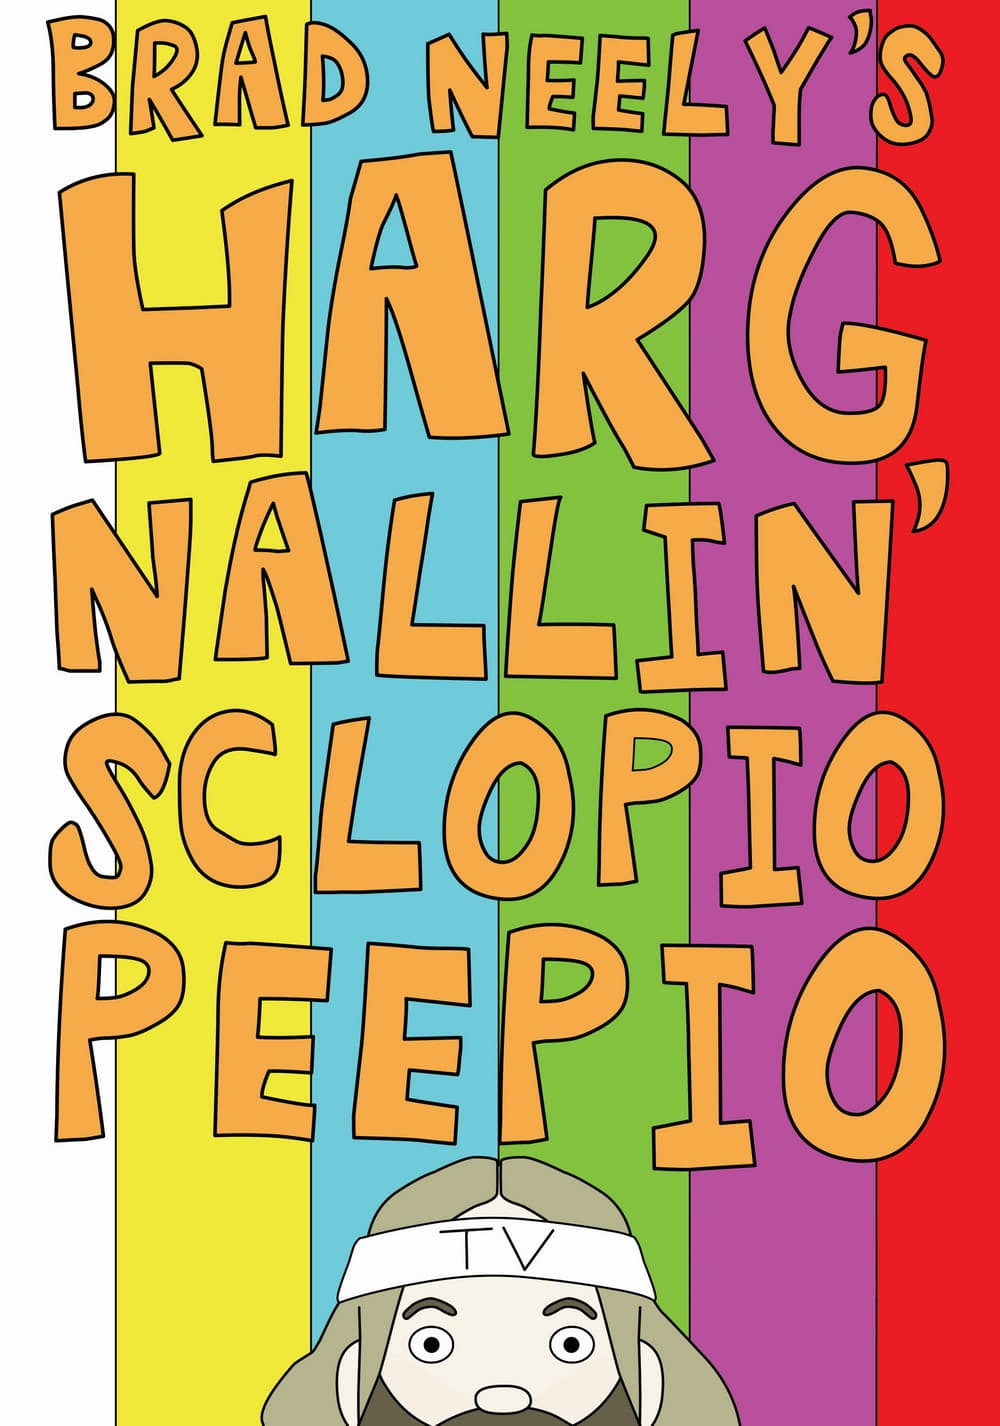 Brad Neely's Harg Nallin Sclopio Peepio (2016)